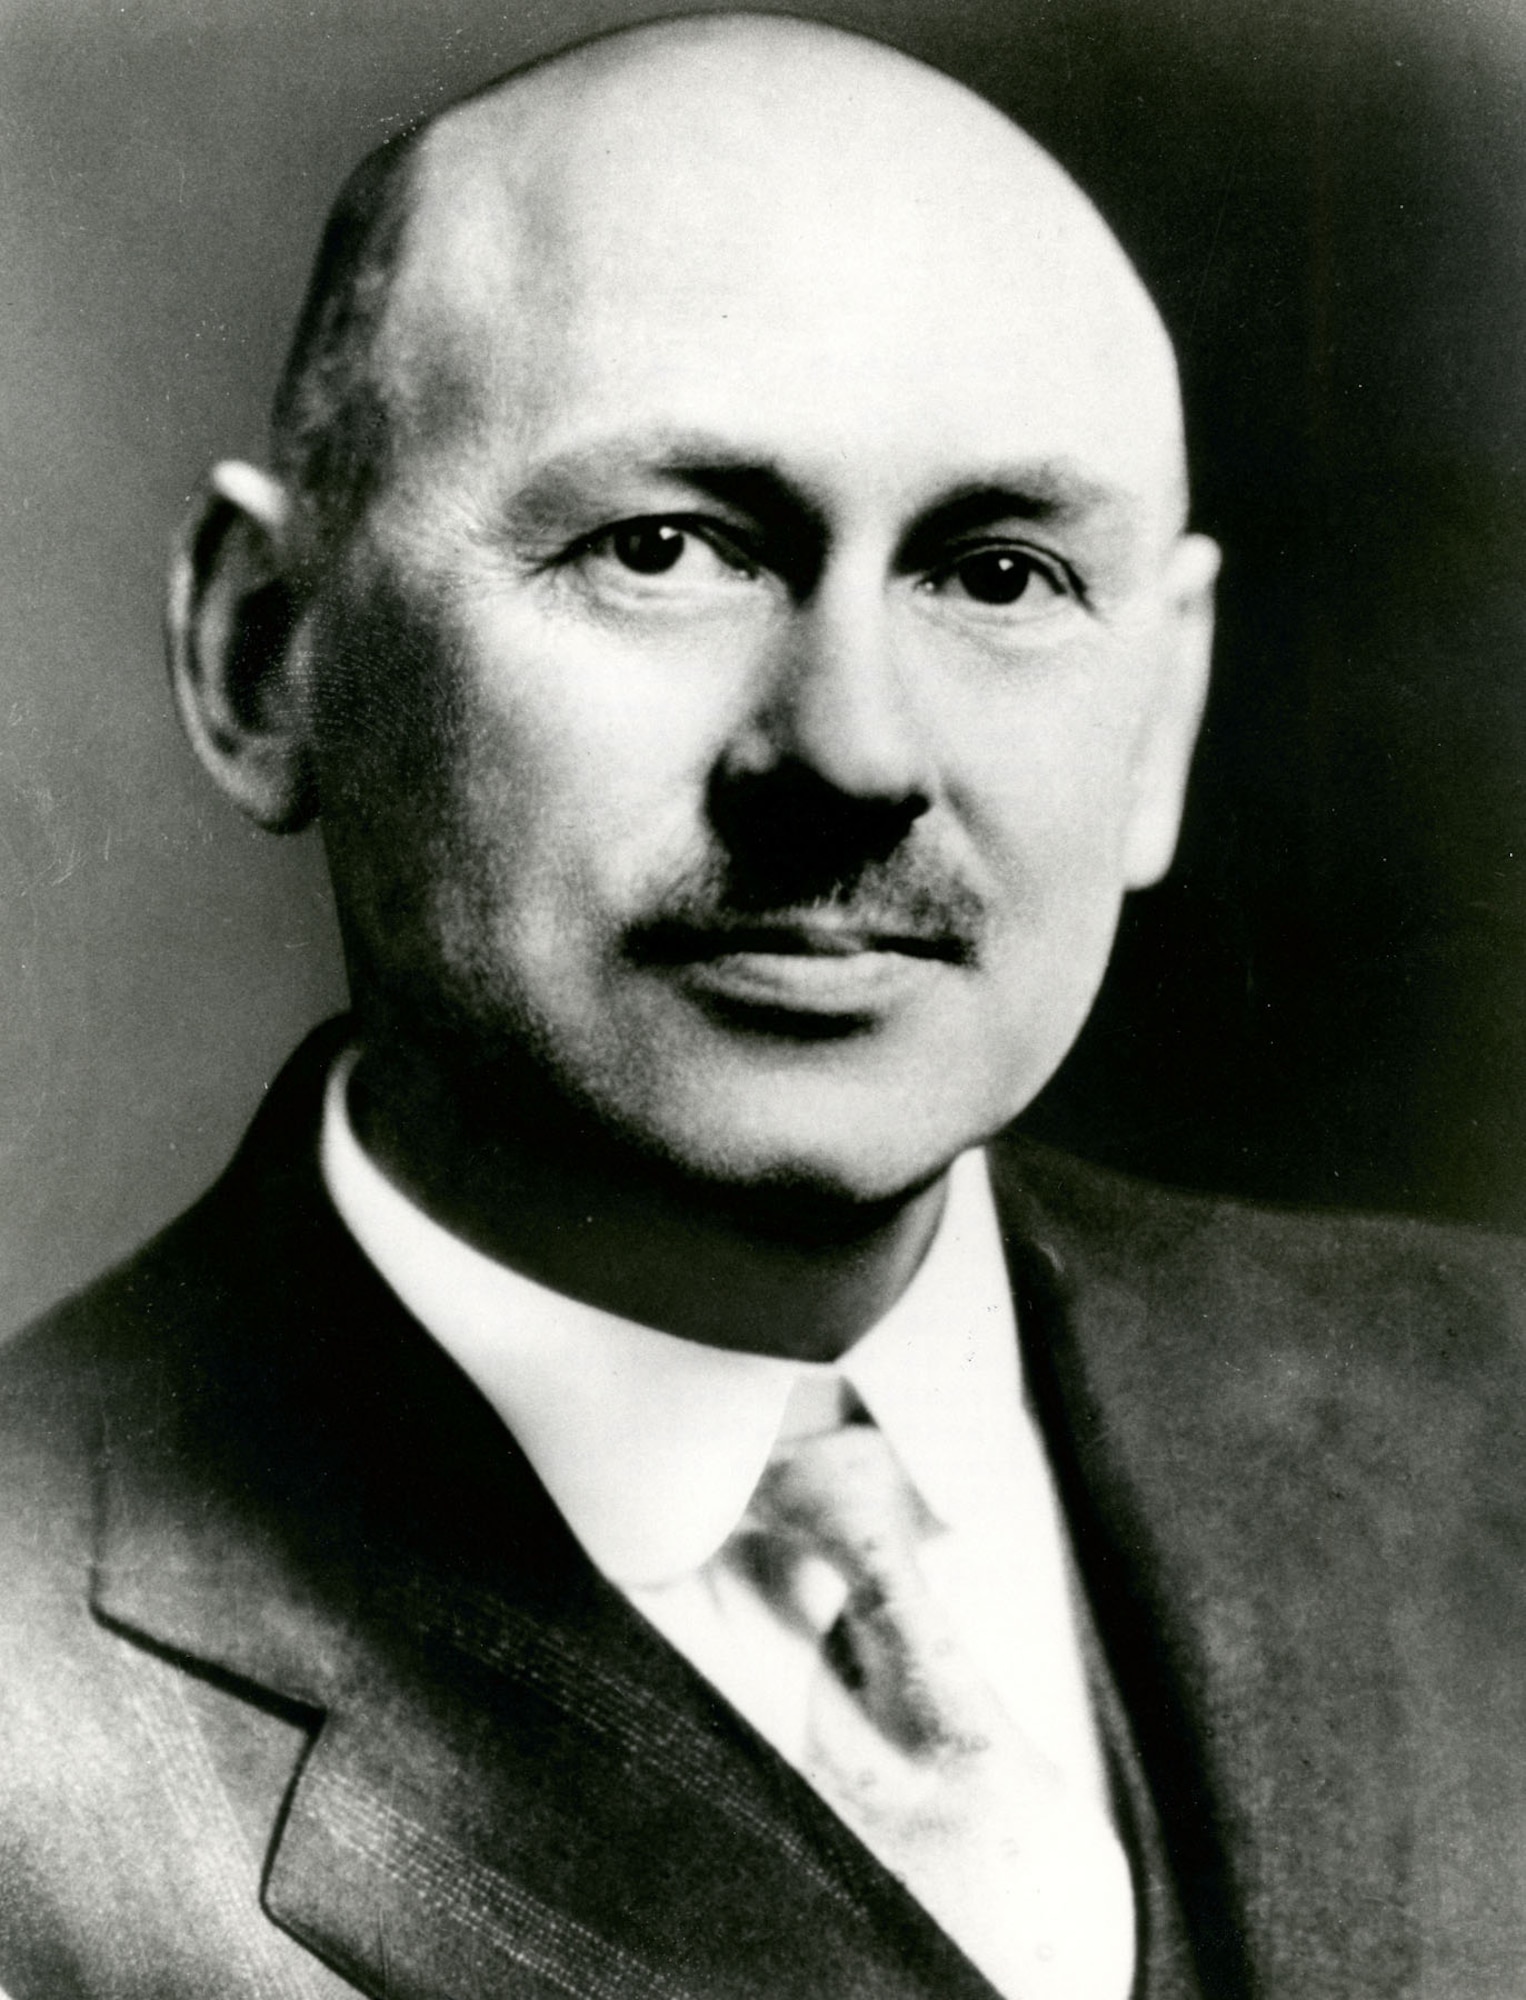 Dr. Robert H. Goddard